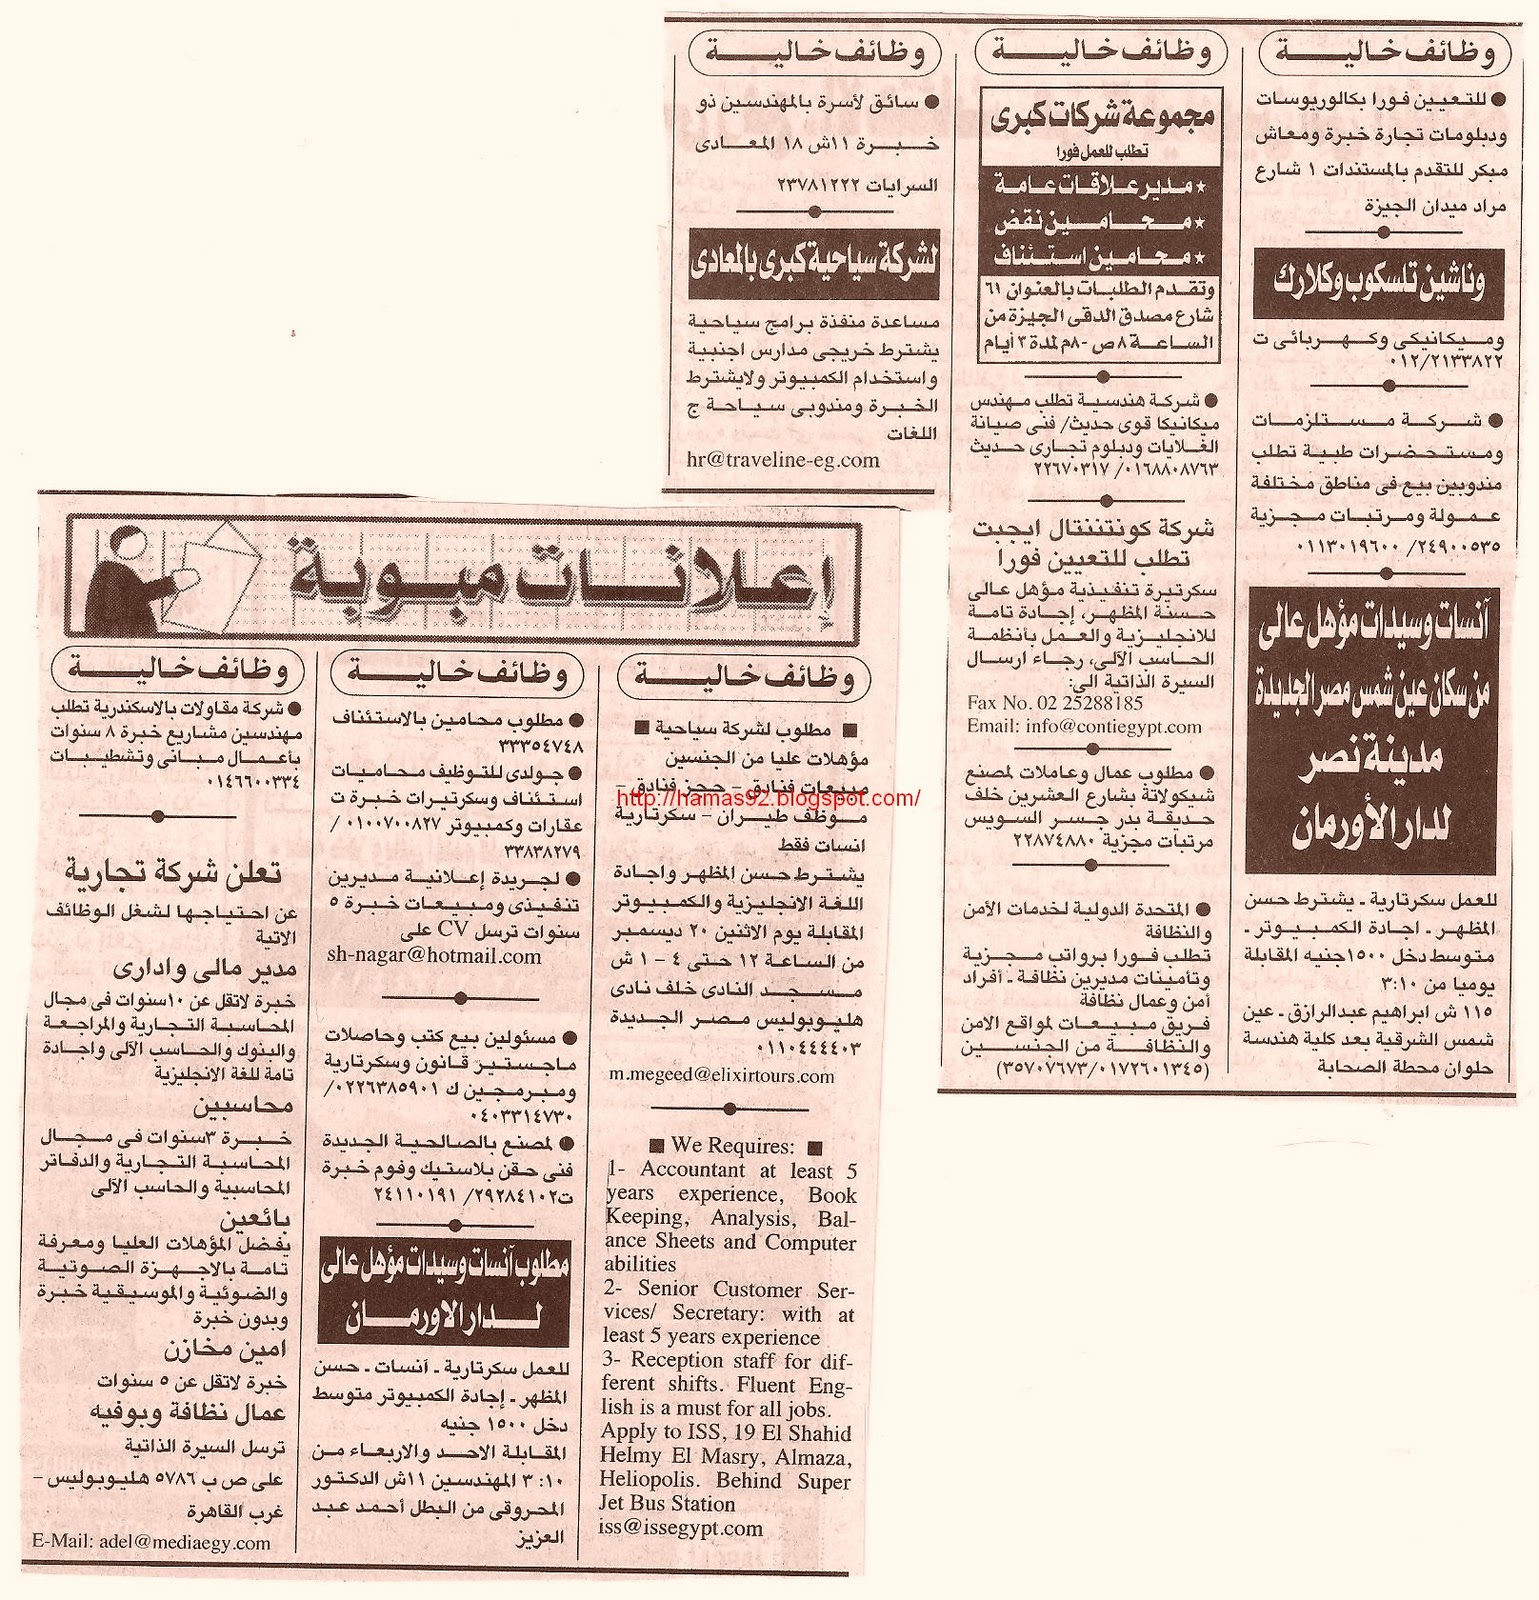  وظائف خاليه من جريده الاهرام - الاحد 19 ديسمبر 2010  Picture+002